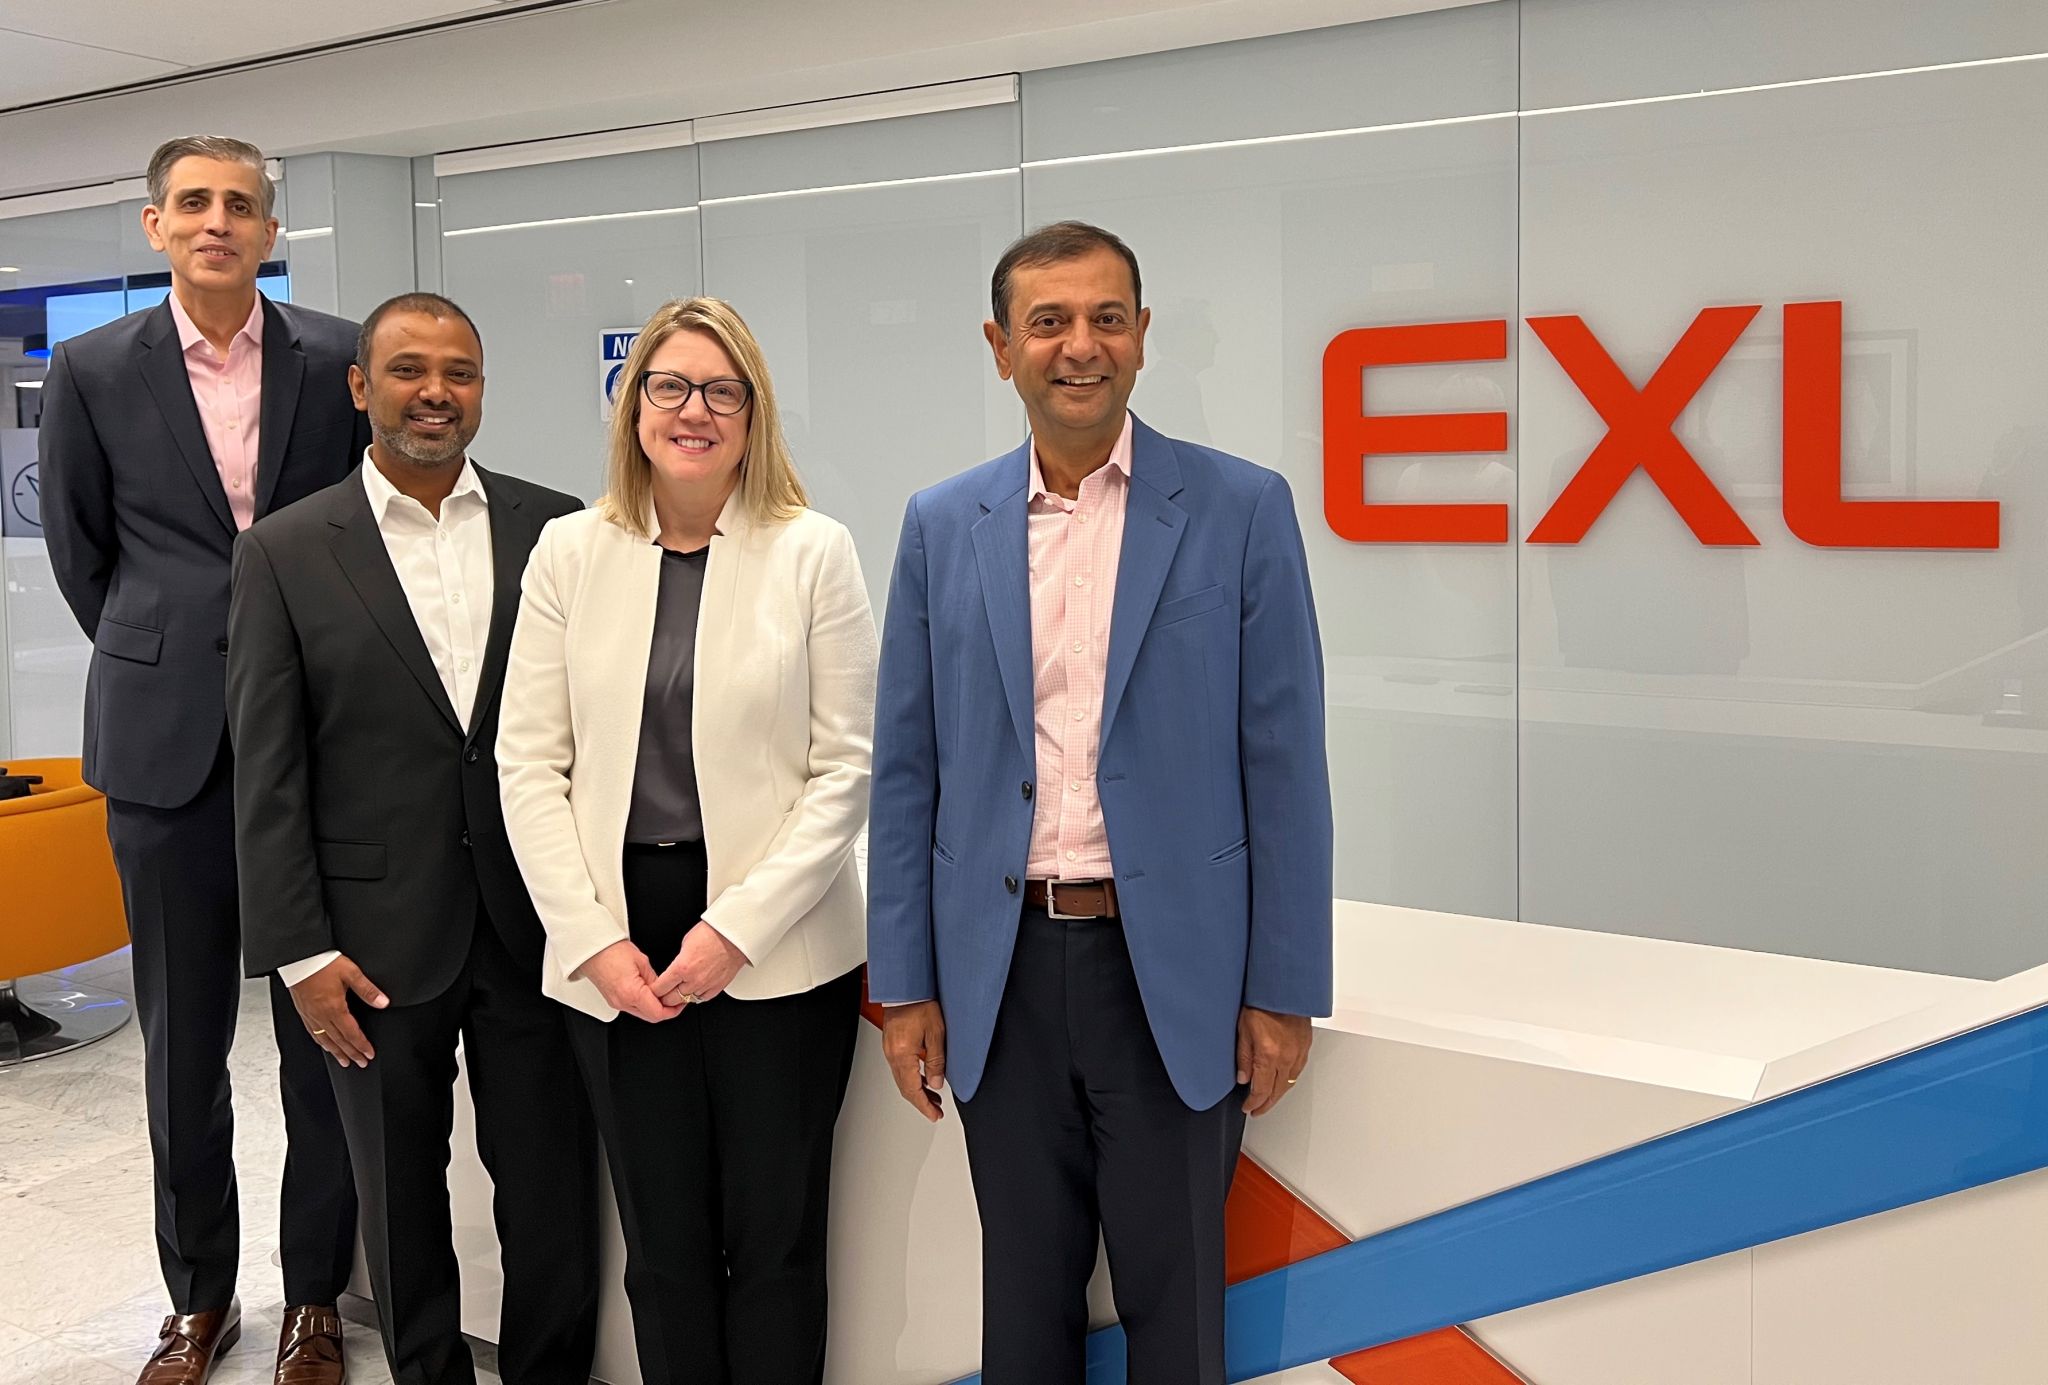 Leading data analytics company EXL announces revenue growth of 25.9%